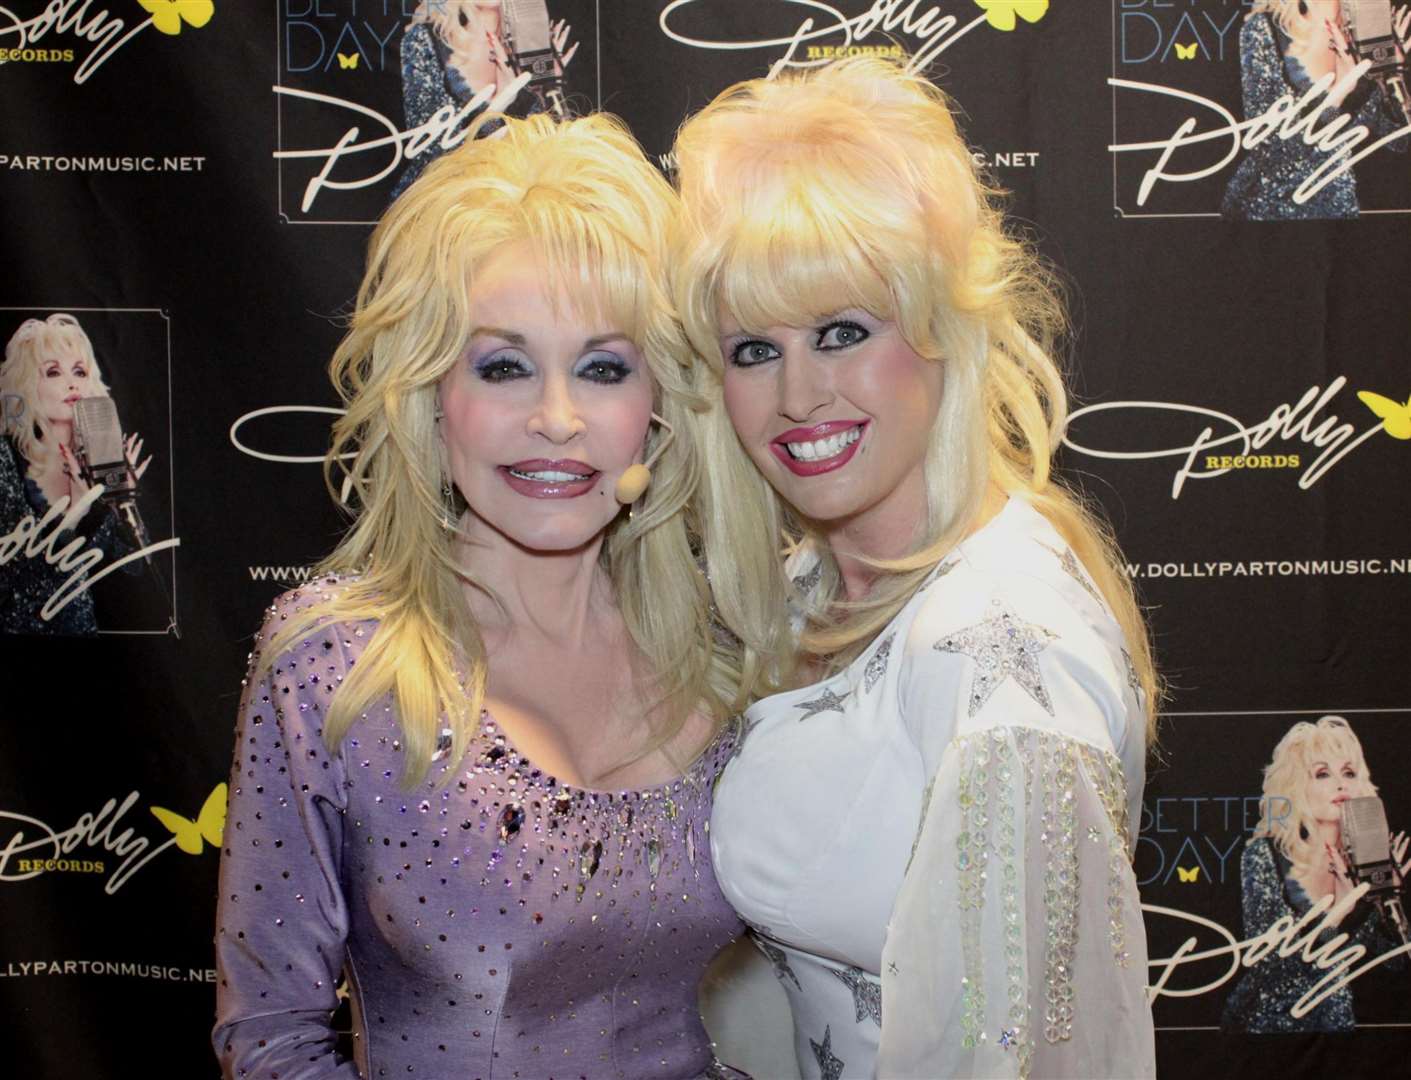 Sarah Jayne with Dolly Parton. Photo: Sarah Jayne